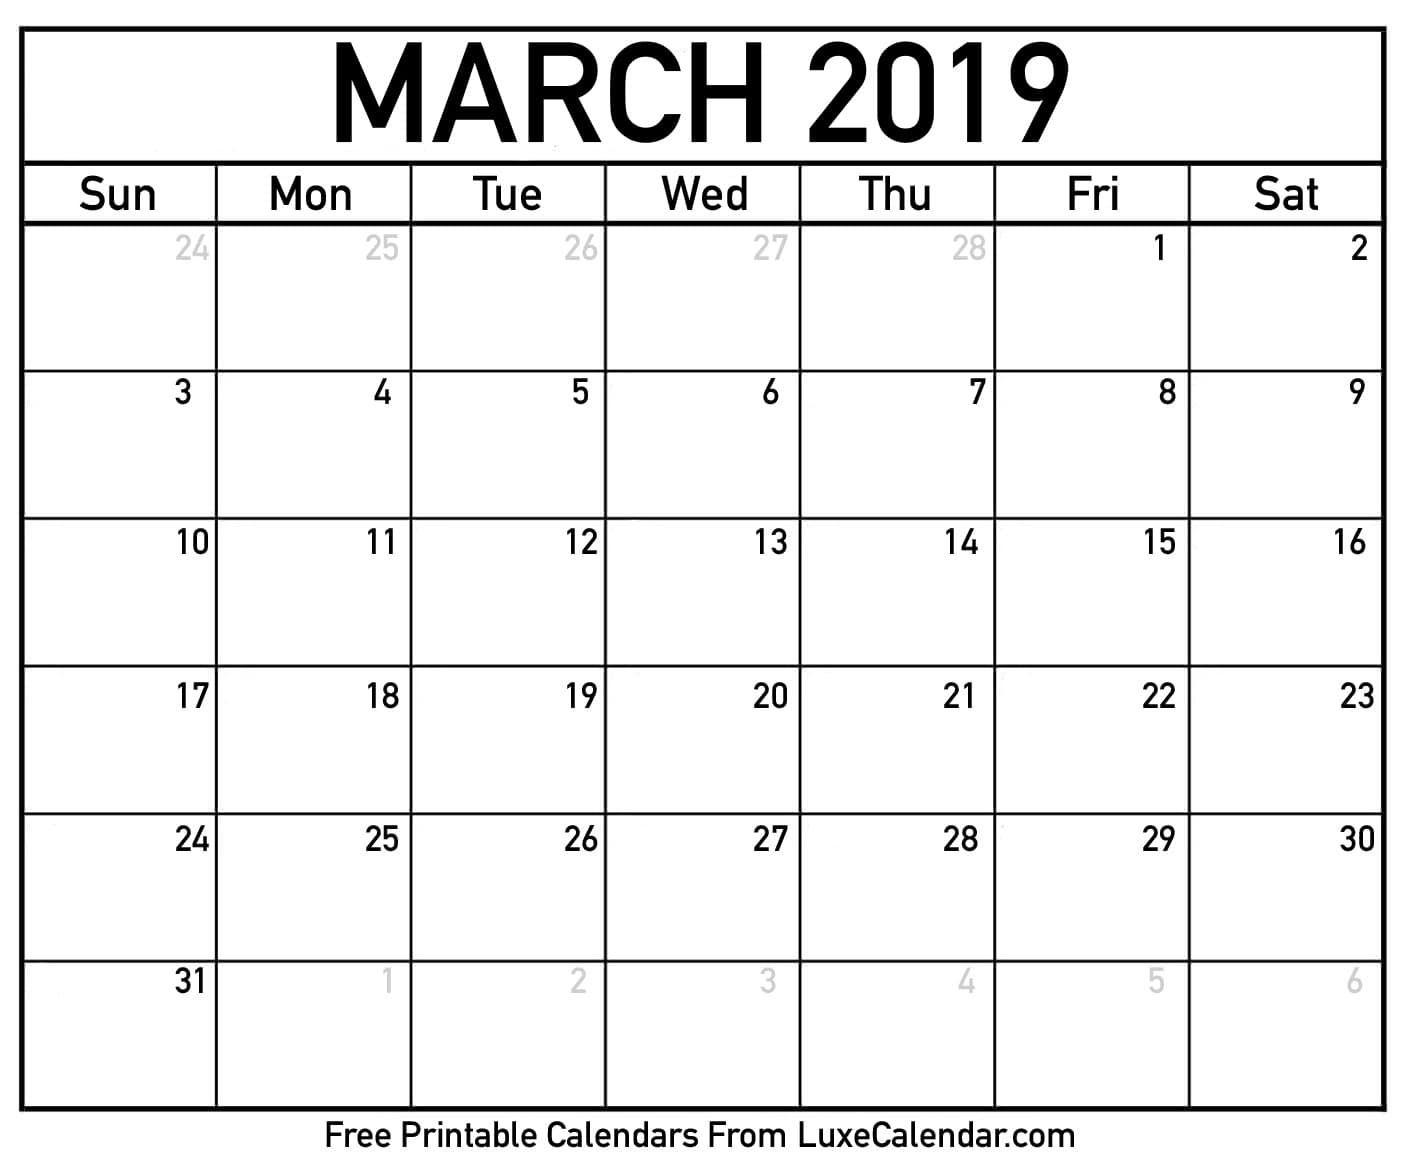 Blank March 2019 Printable Calendar - Luxe Calendar - Free Printable March Activities